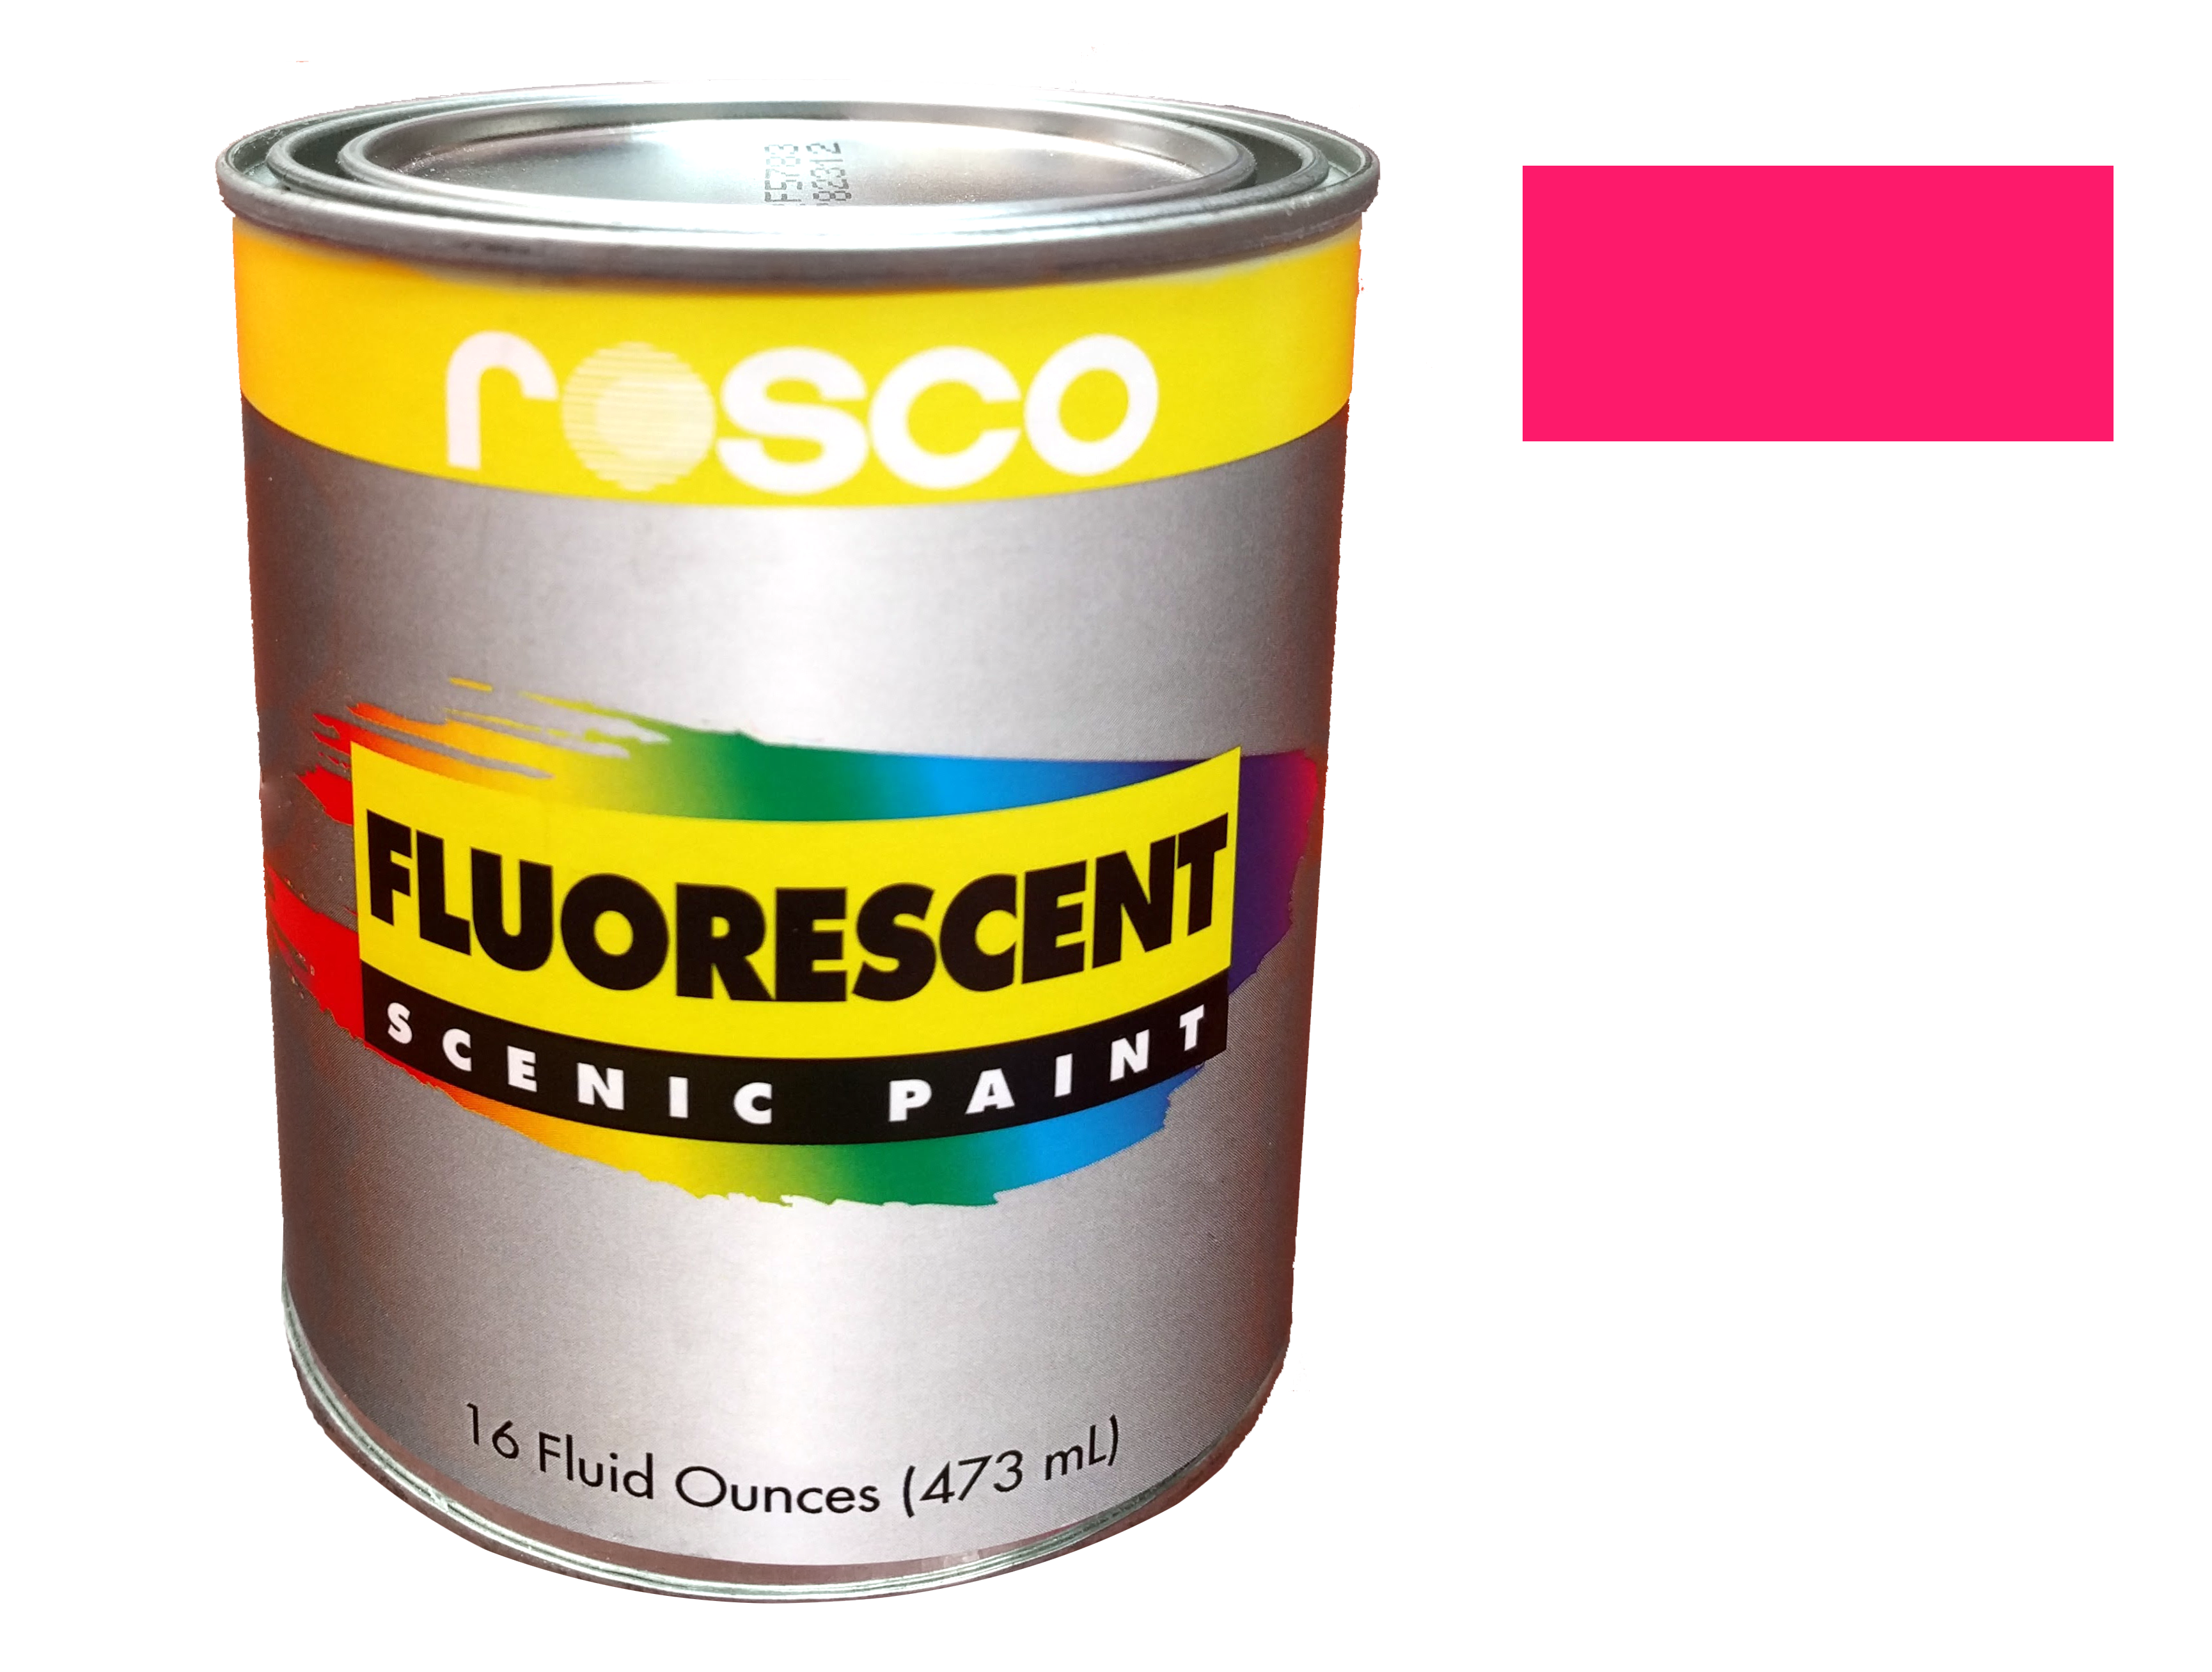 Rosco Fluorescent Paint from Rose Brand